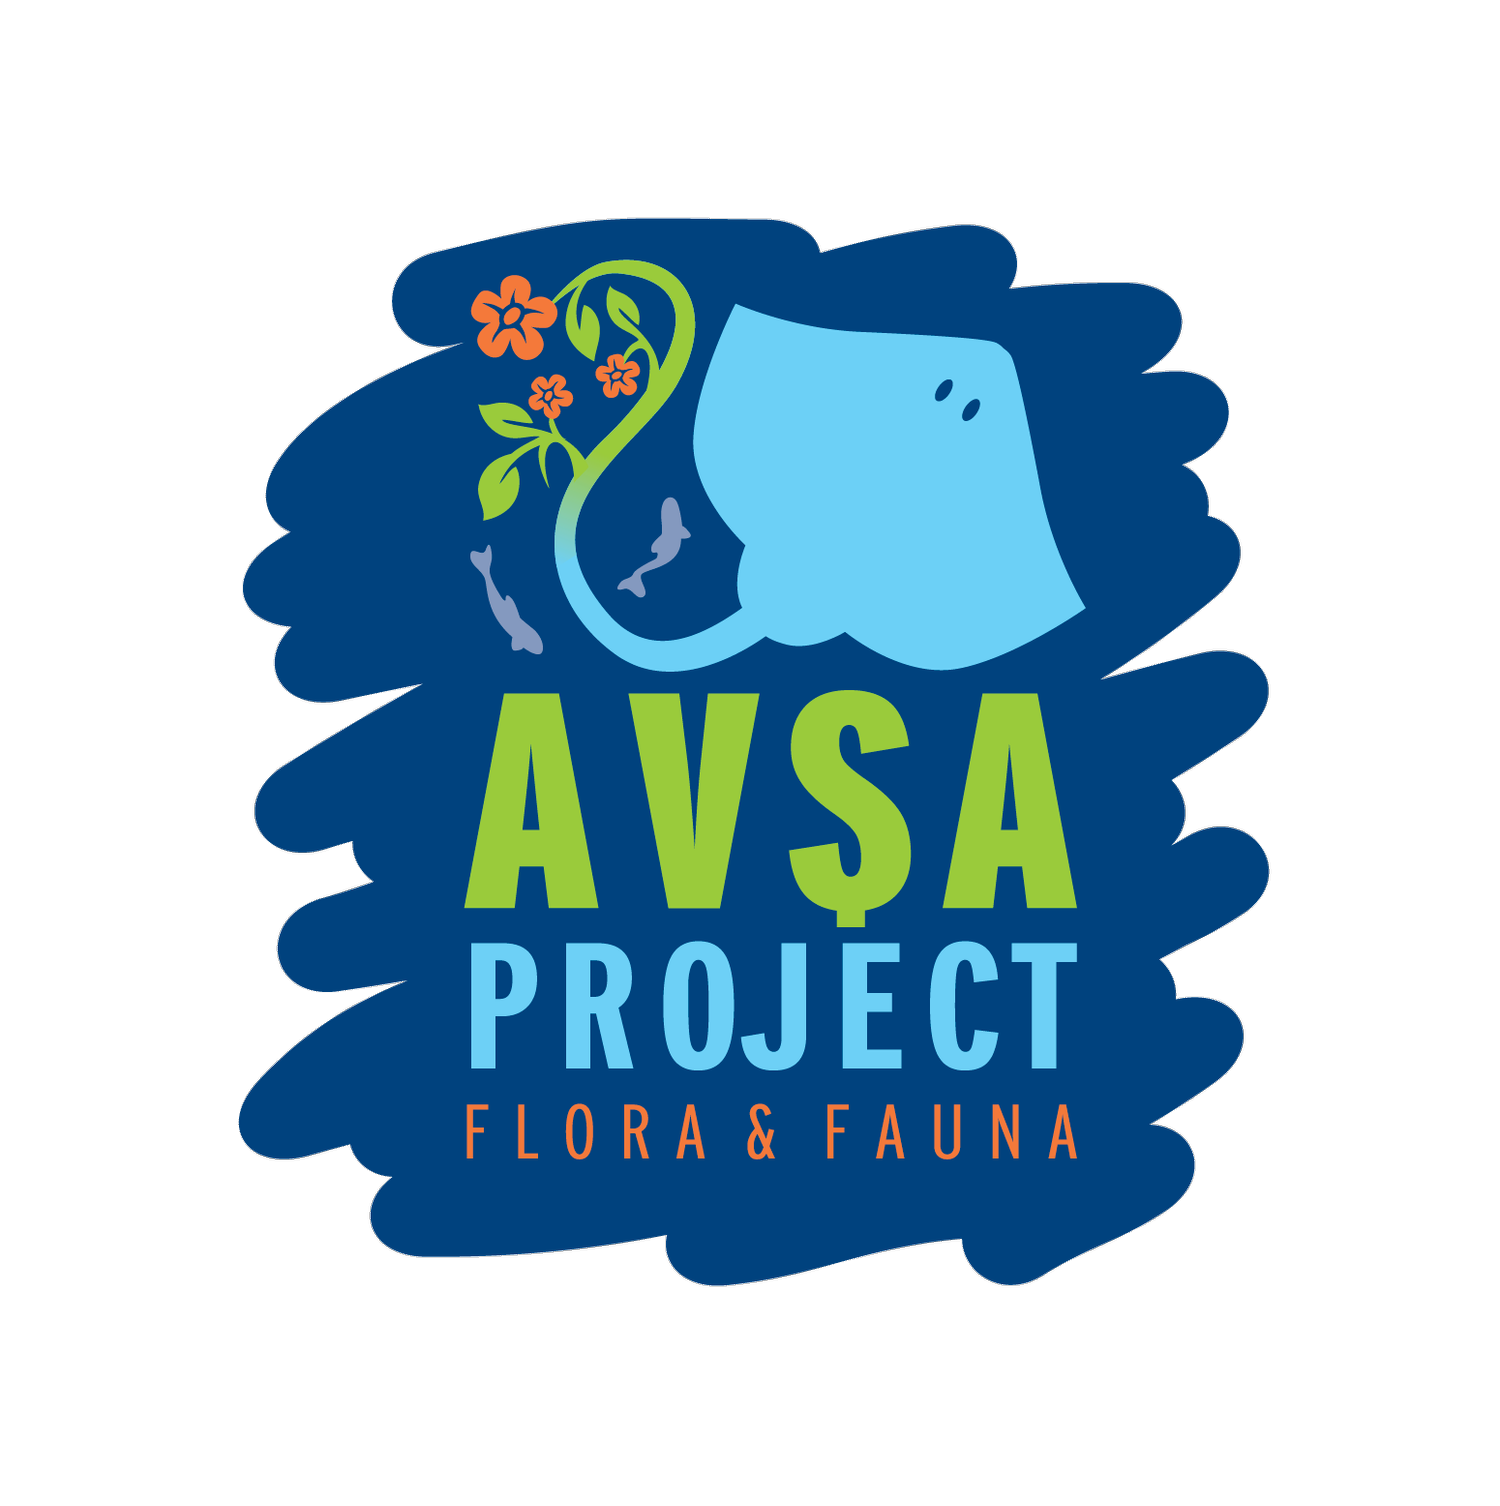 The Avsa Project